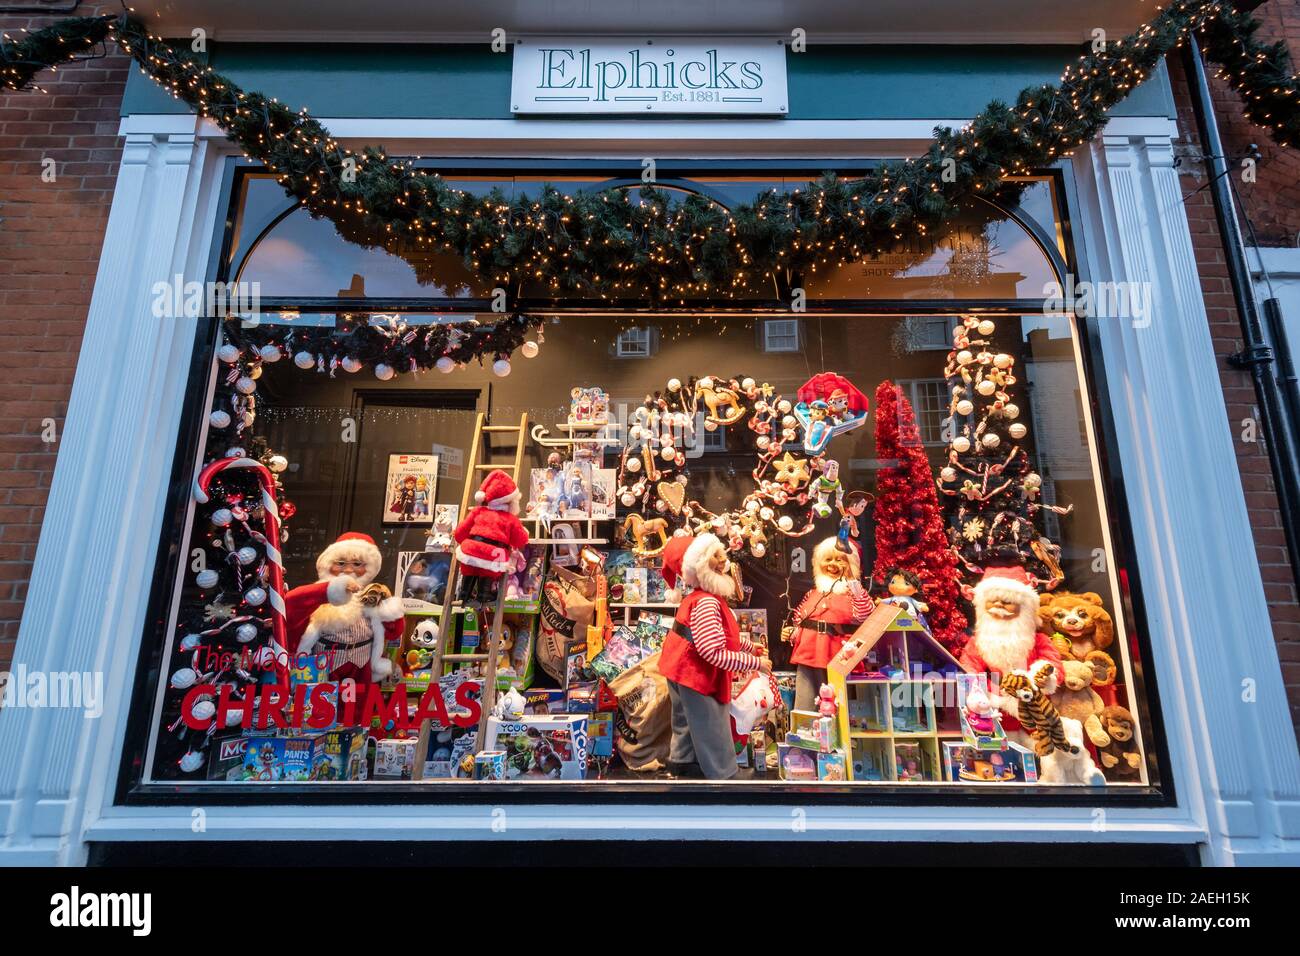 Elphicks department store in Farnham town centre - shop window Christmas display, Surrey, UK Stock Photo